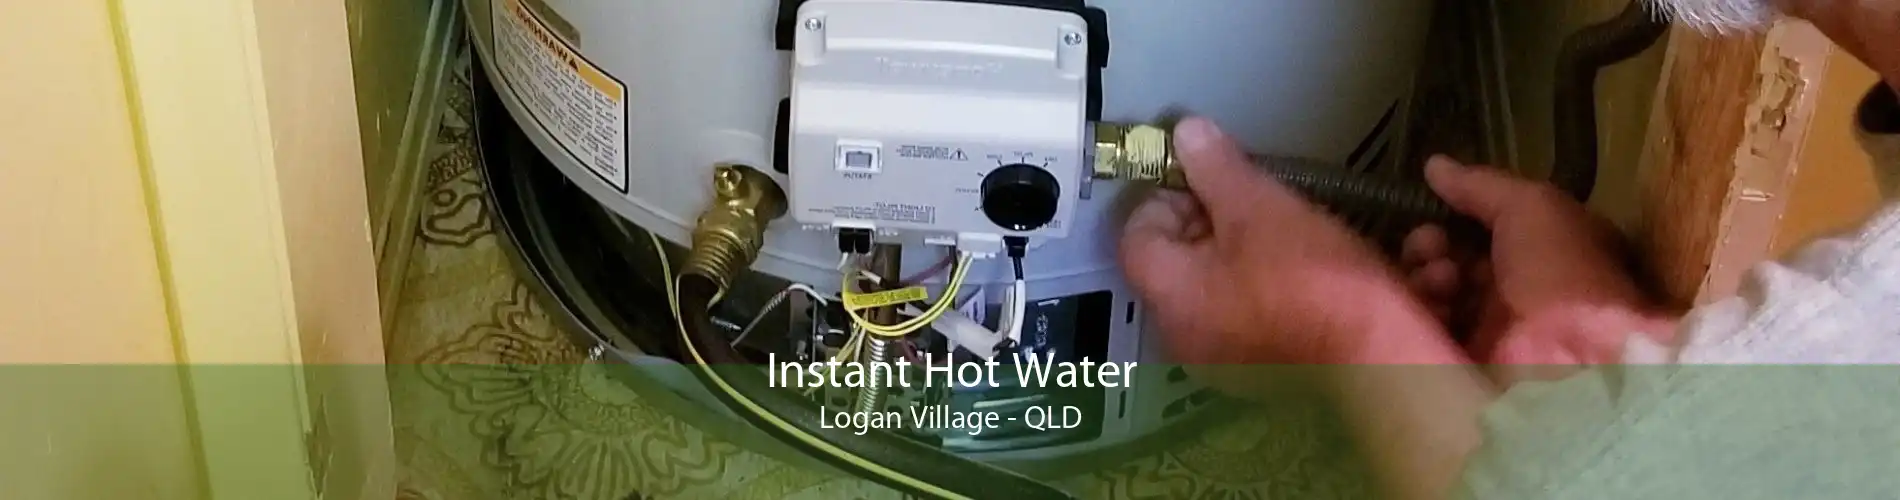 Instant Hot Water Logan Village - QLD